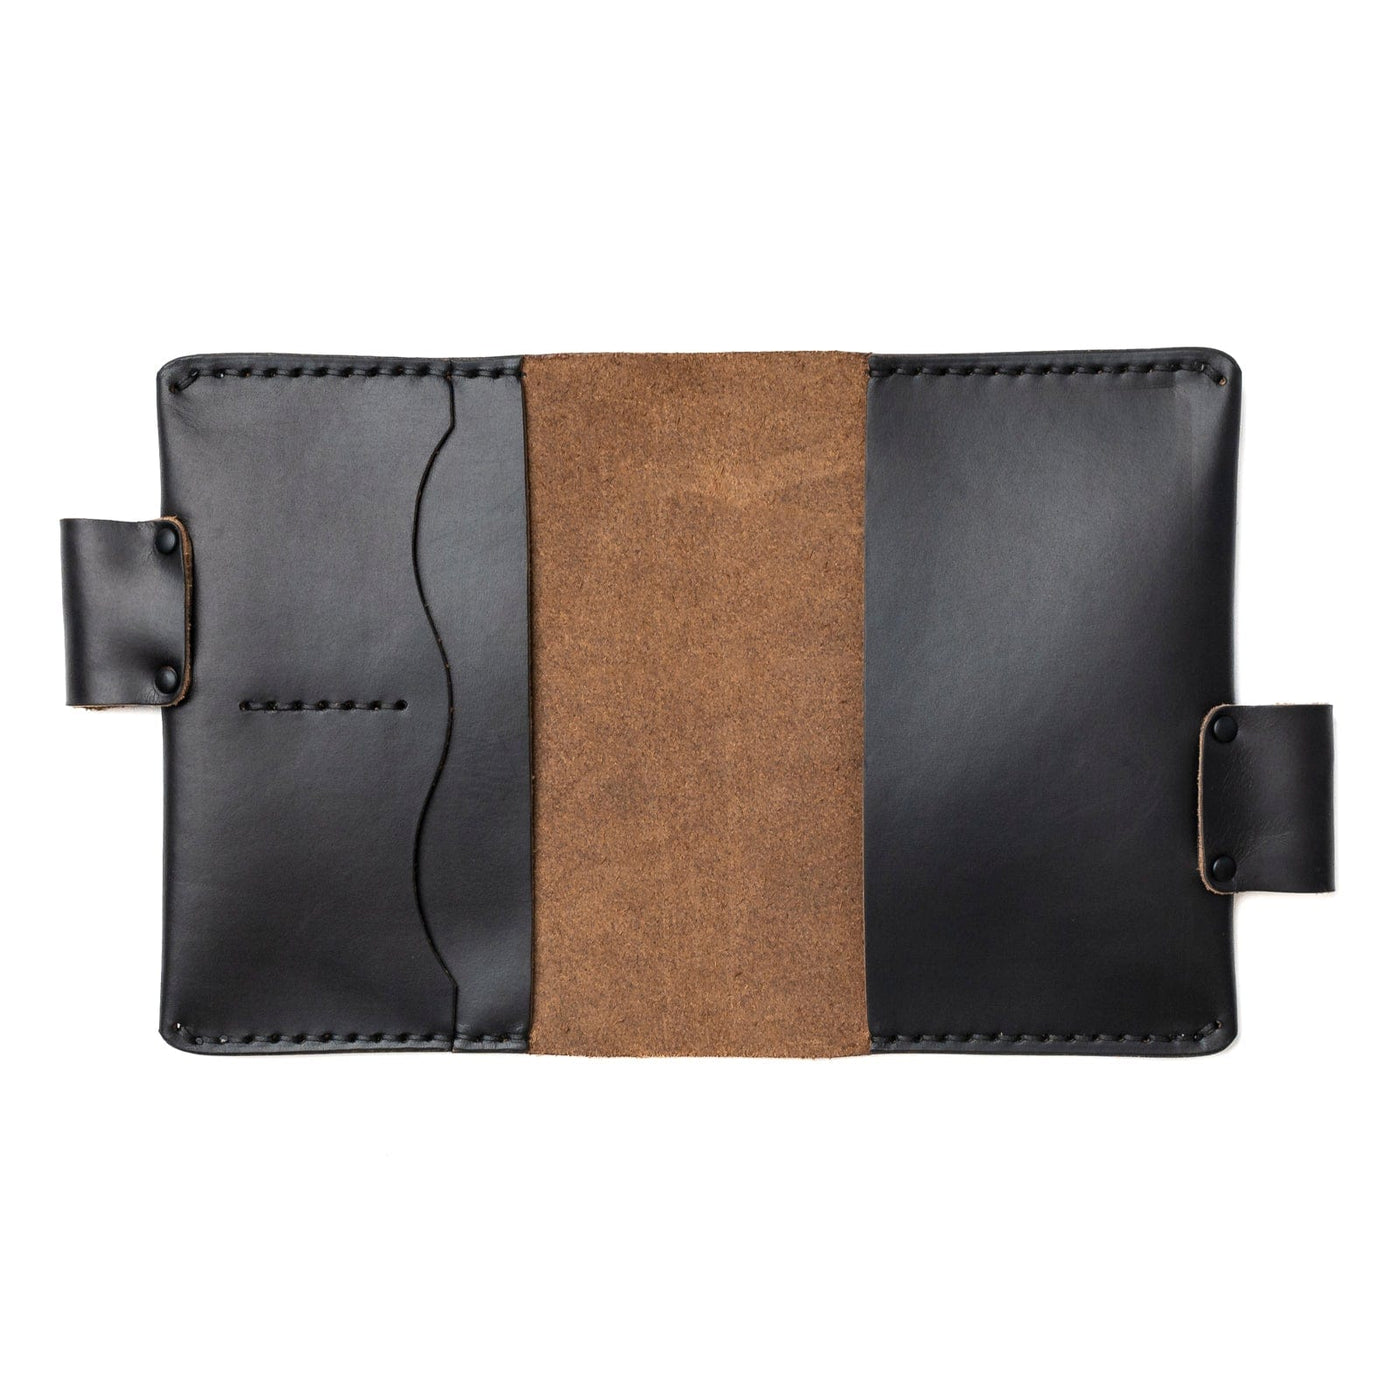 Leather Hobonichi Techo Planner Cover - Black Popov Leather